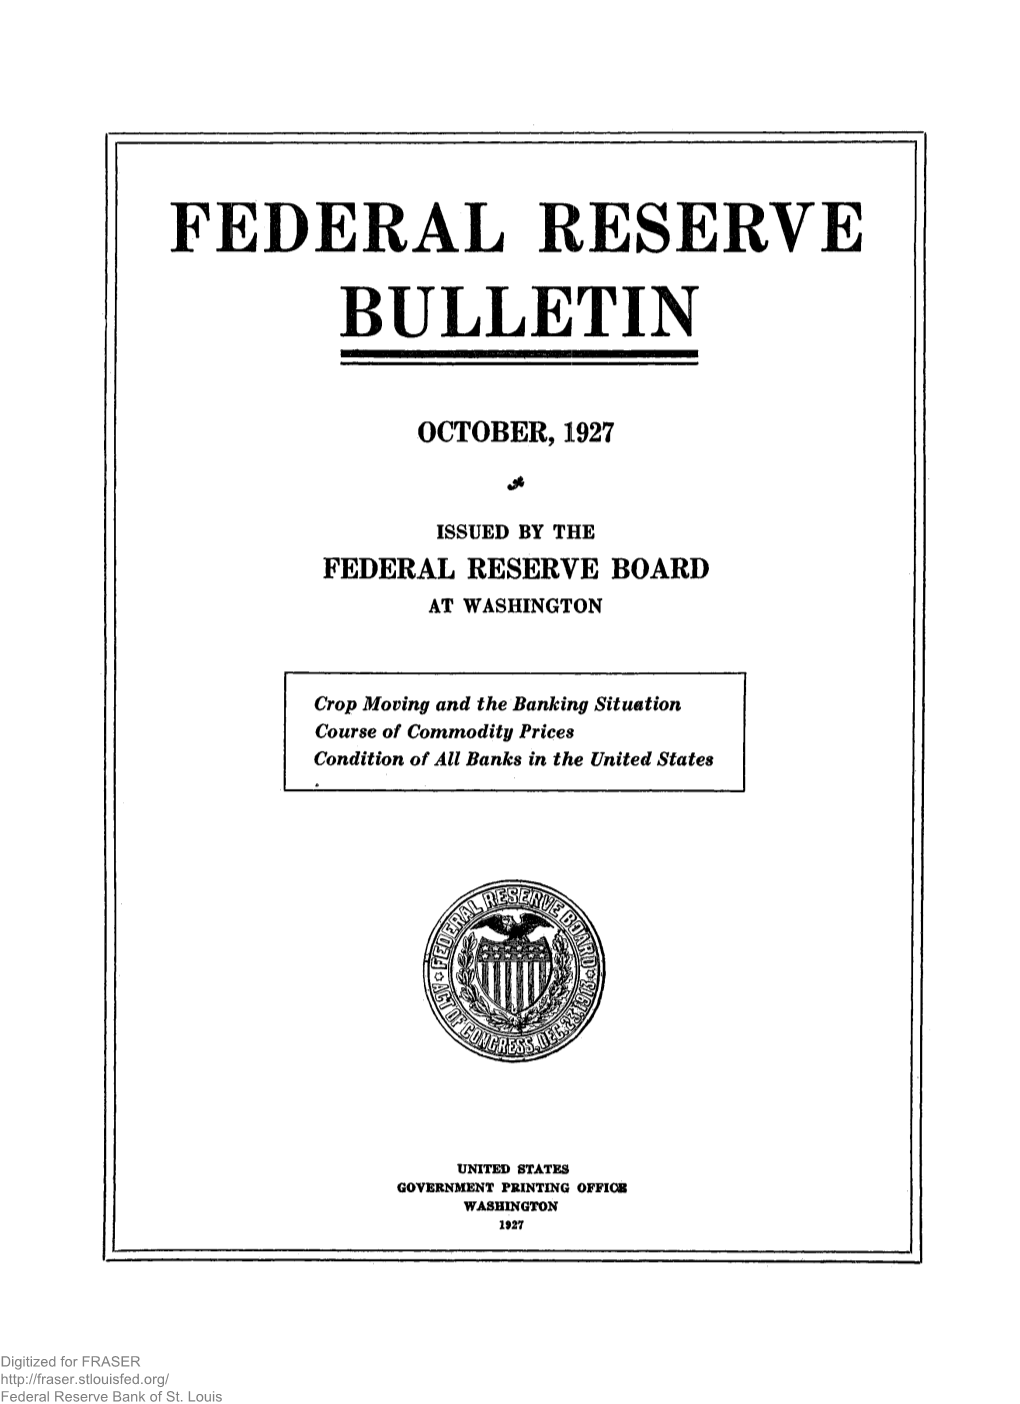 Federal Reserve Bulletin October 1927